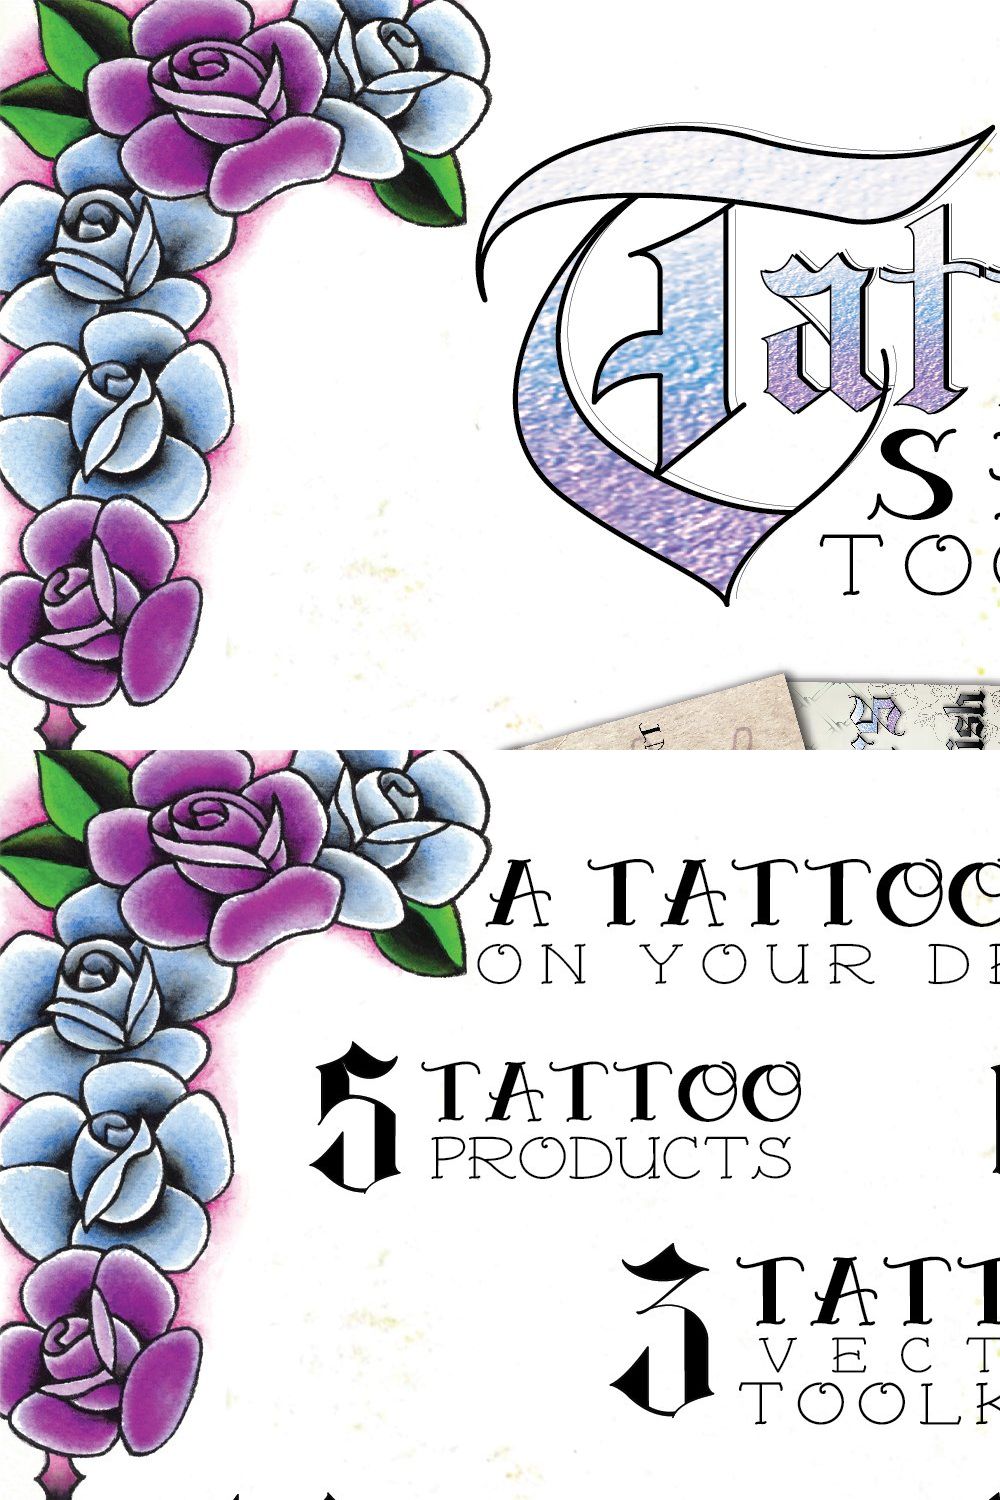 Digital Tattoo Shop Toolkit Bundle pinterest preview image.